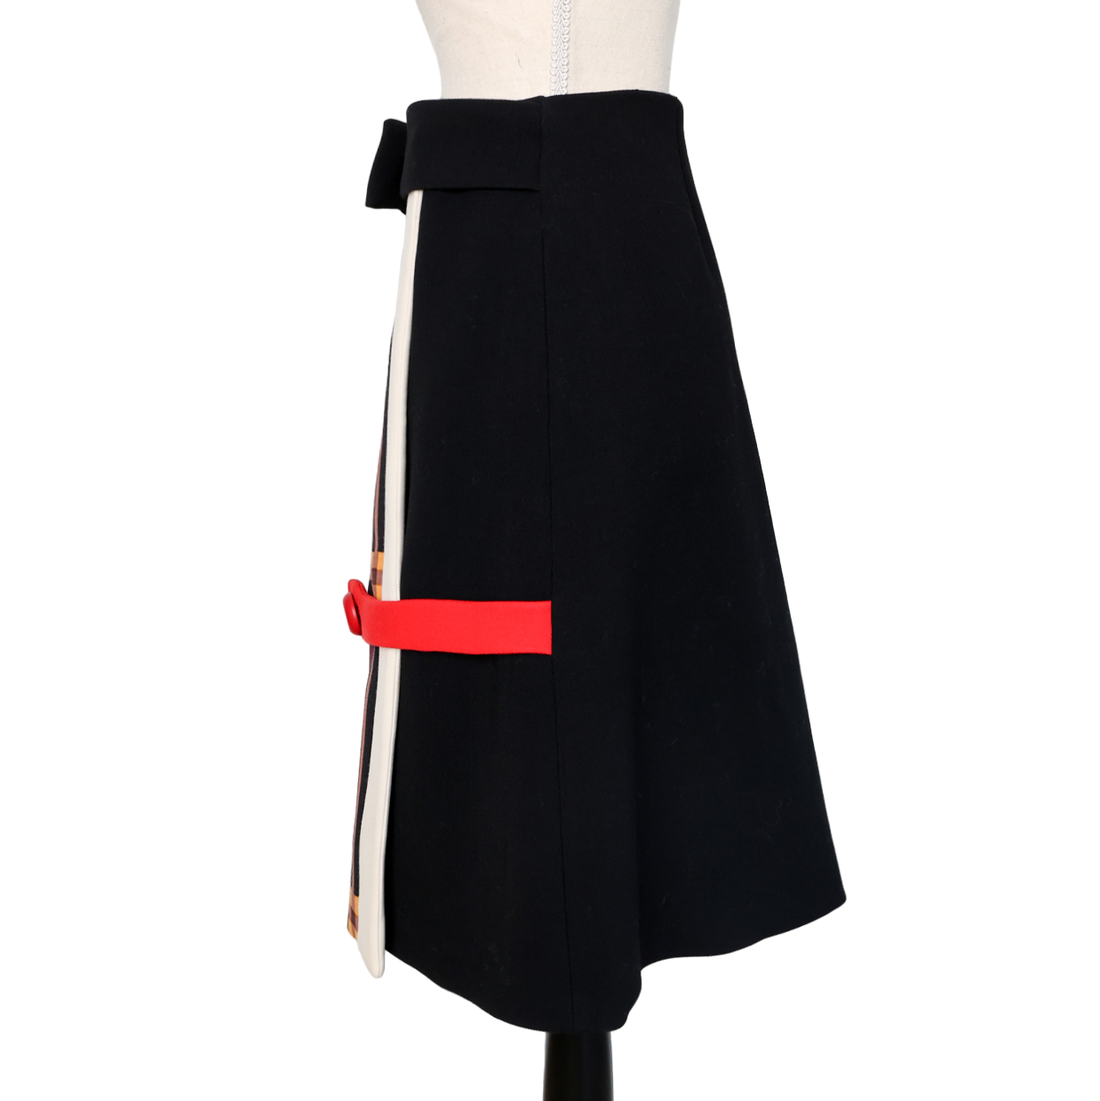 Prada skirt with graphic print